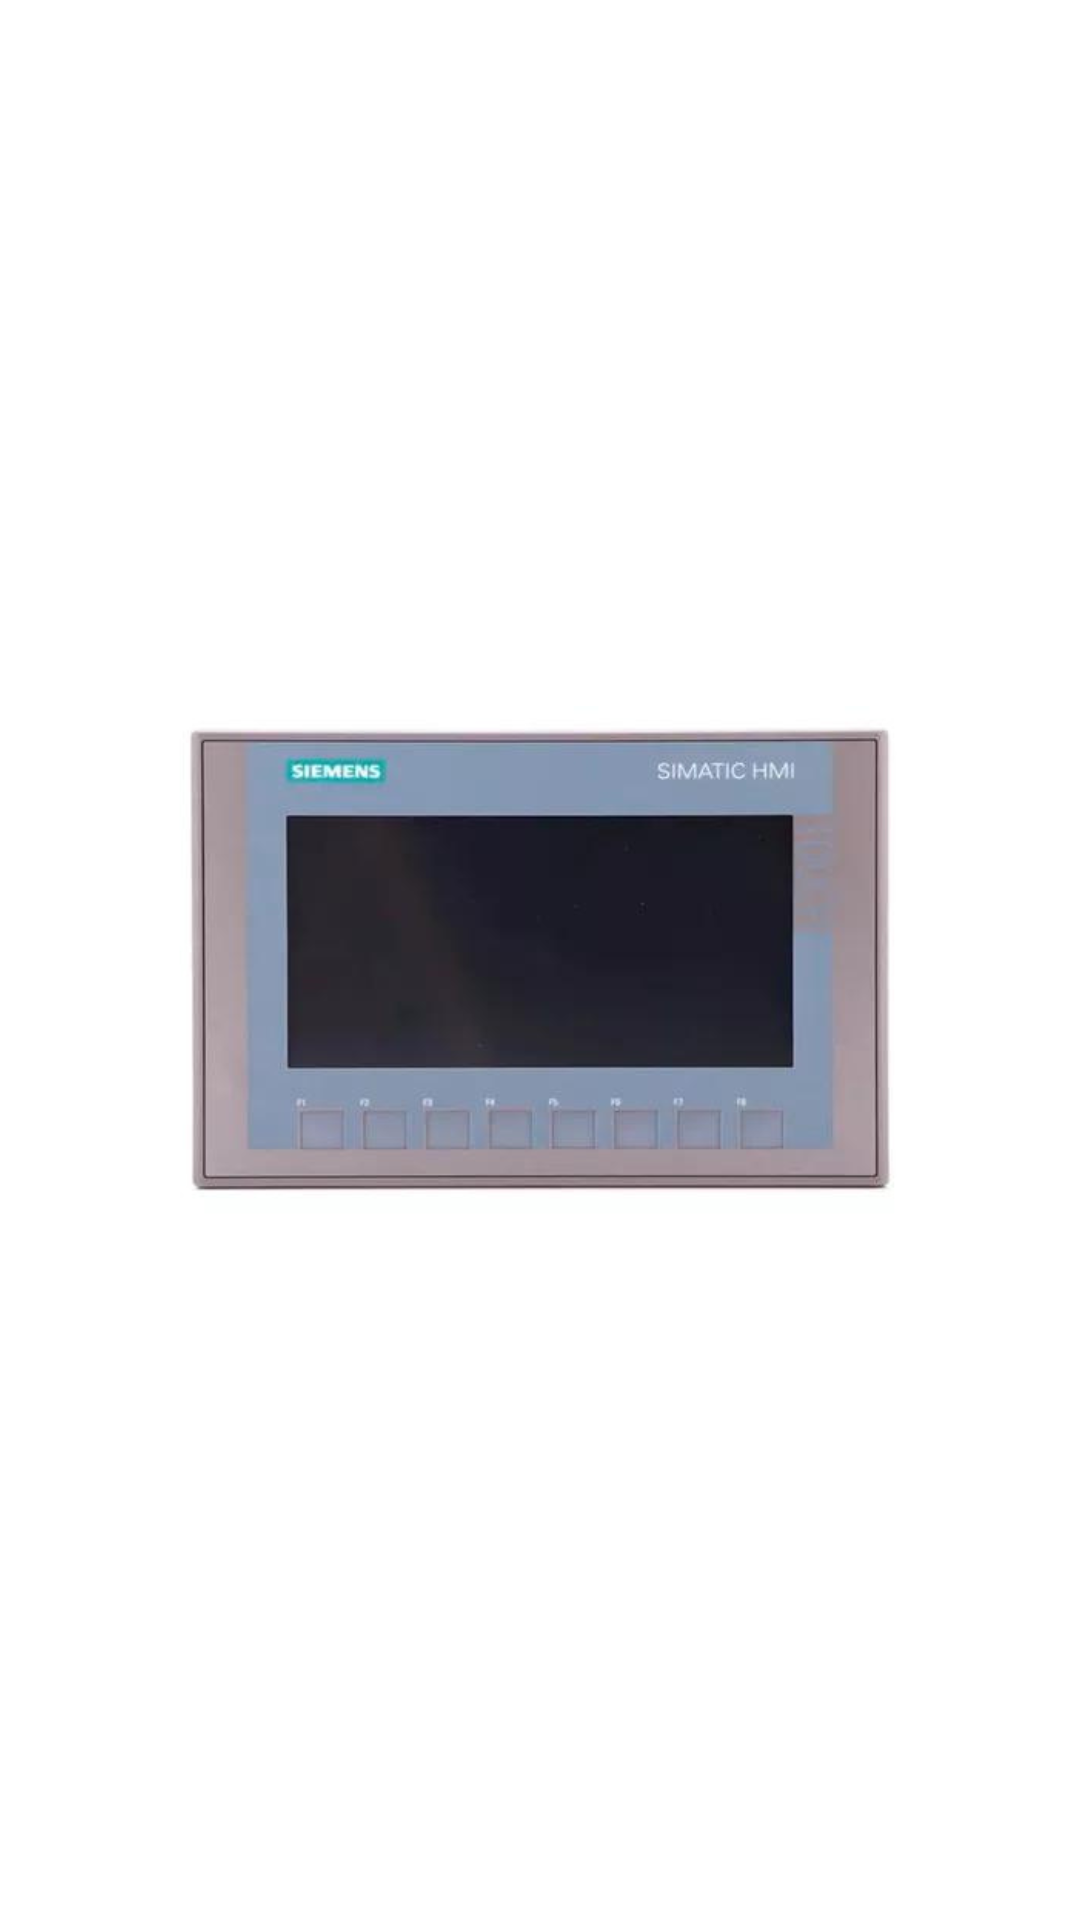 6AV2123-2GA03-0AX0 Siemens SIMATIC HMI, KTP700 Basic DP, Painel Básico, operação tecla/toque, display TFT de 7", 65536 cores, interface PROFIBUS